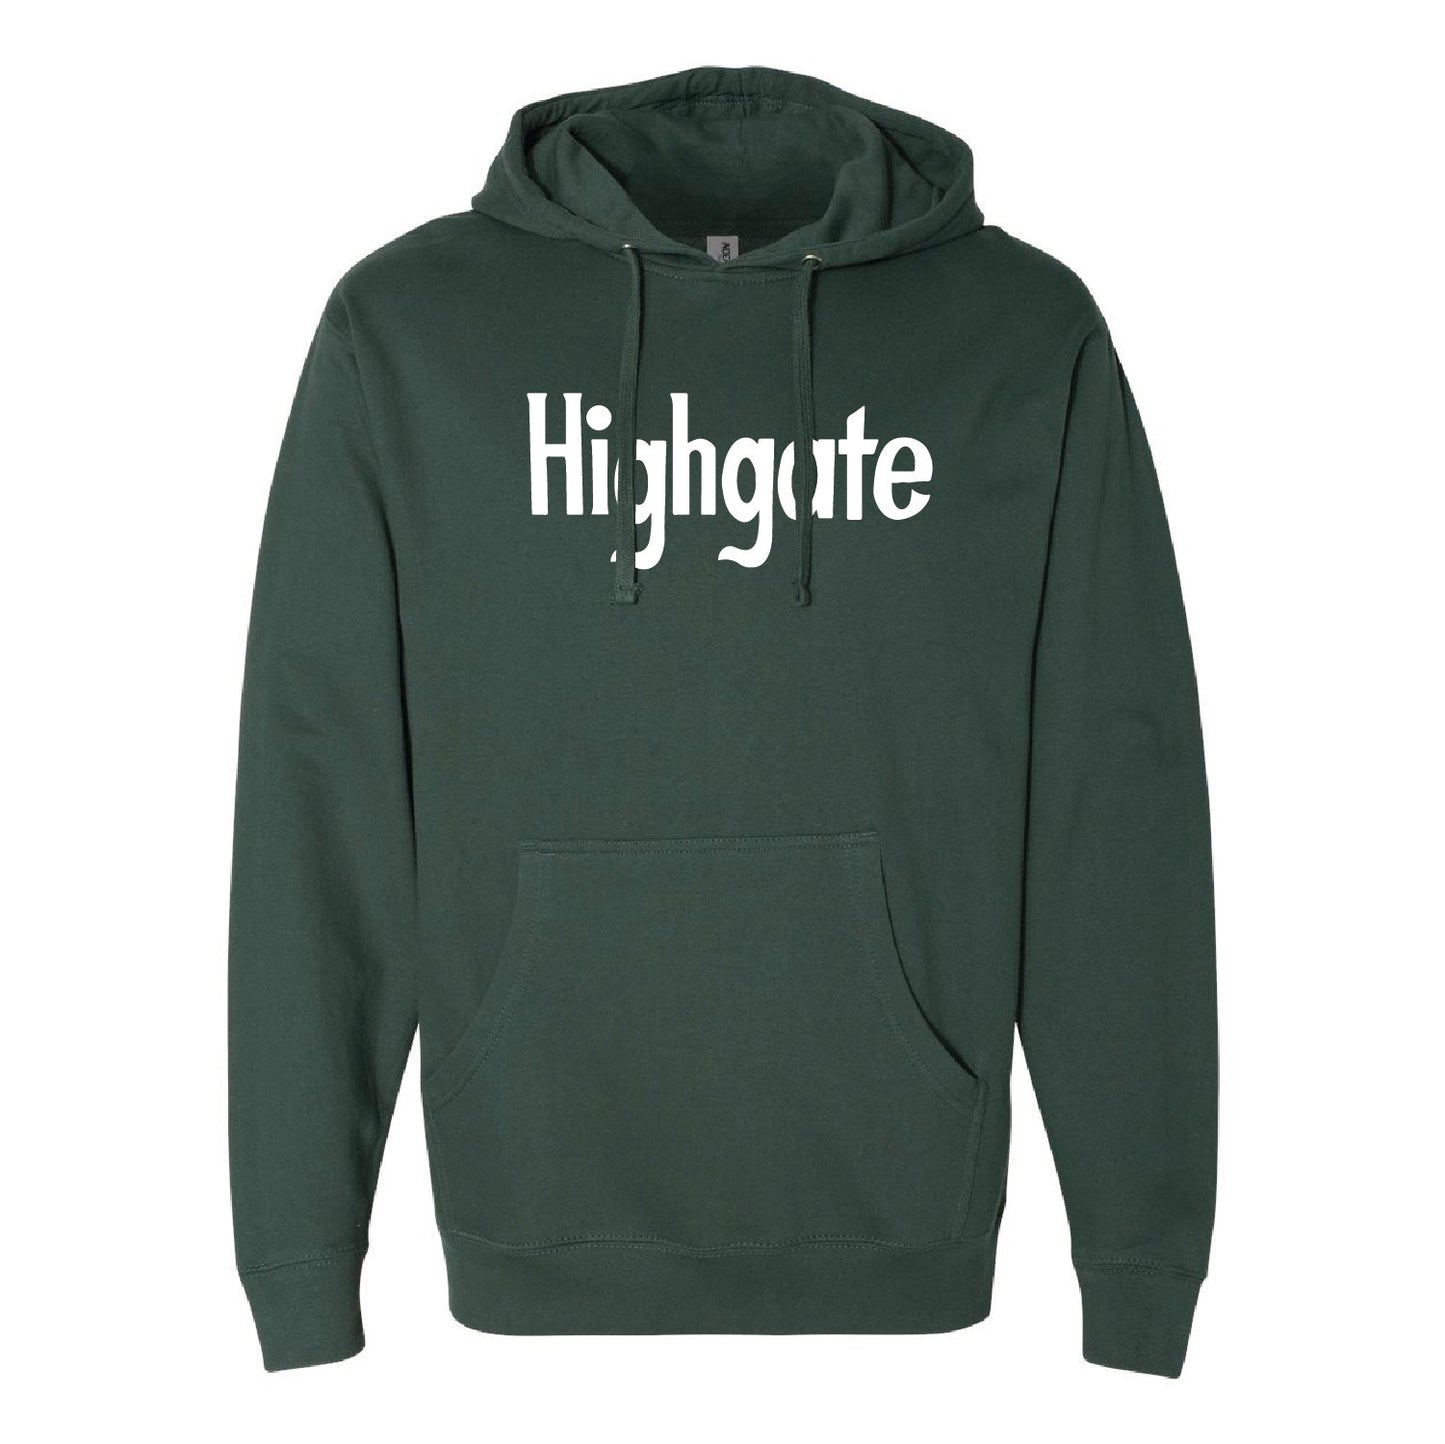 Highgate Unisex Midweight Hooded Sweatshirt - DSP On Demand